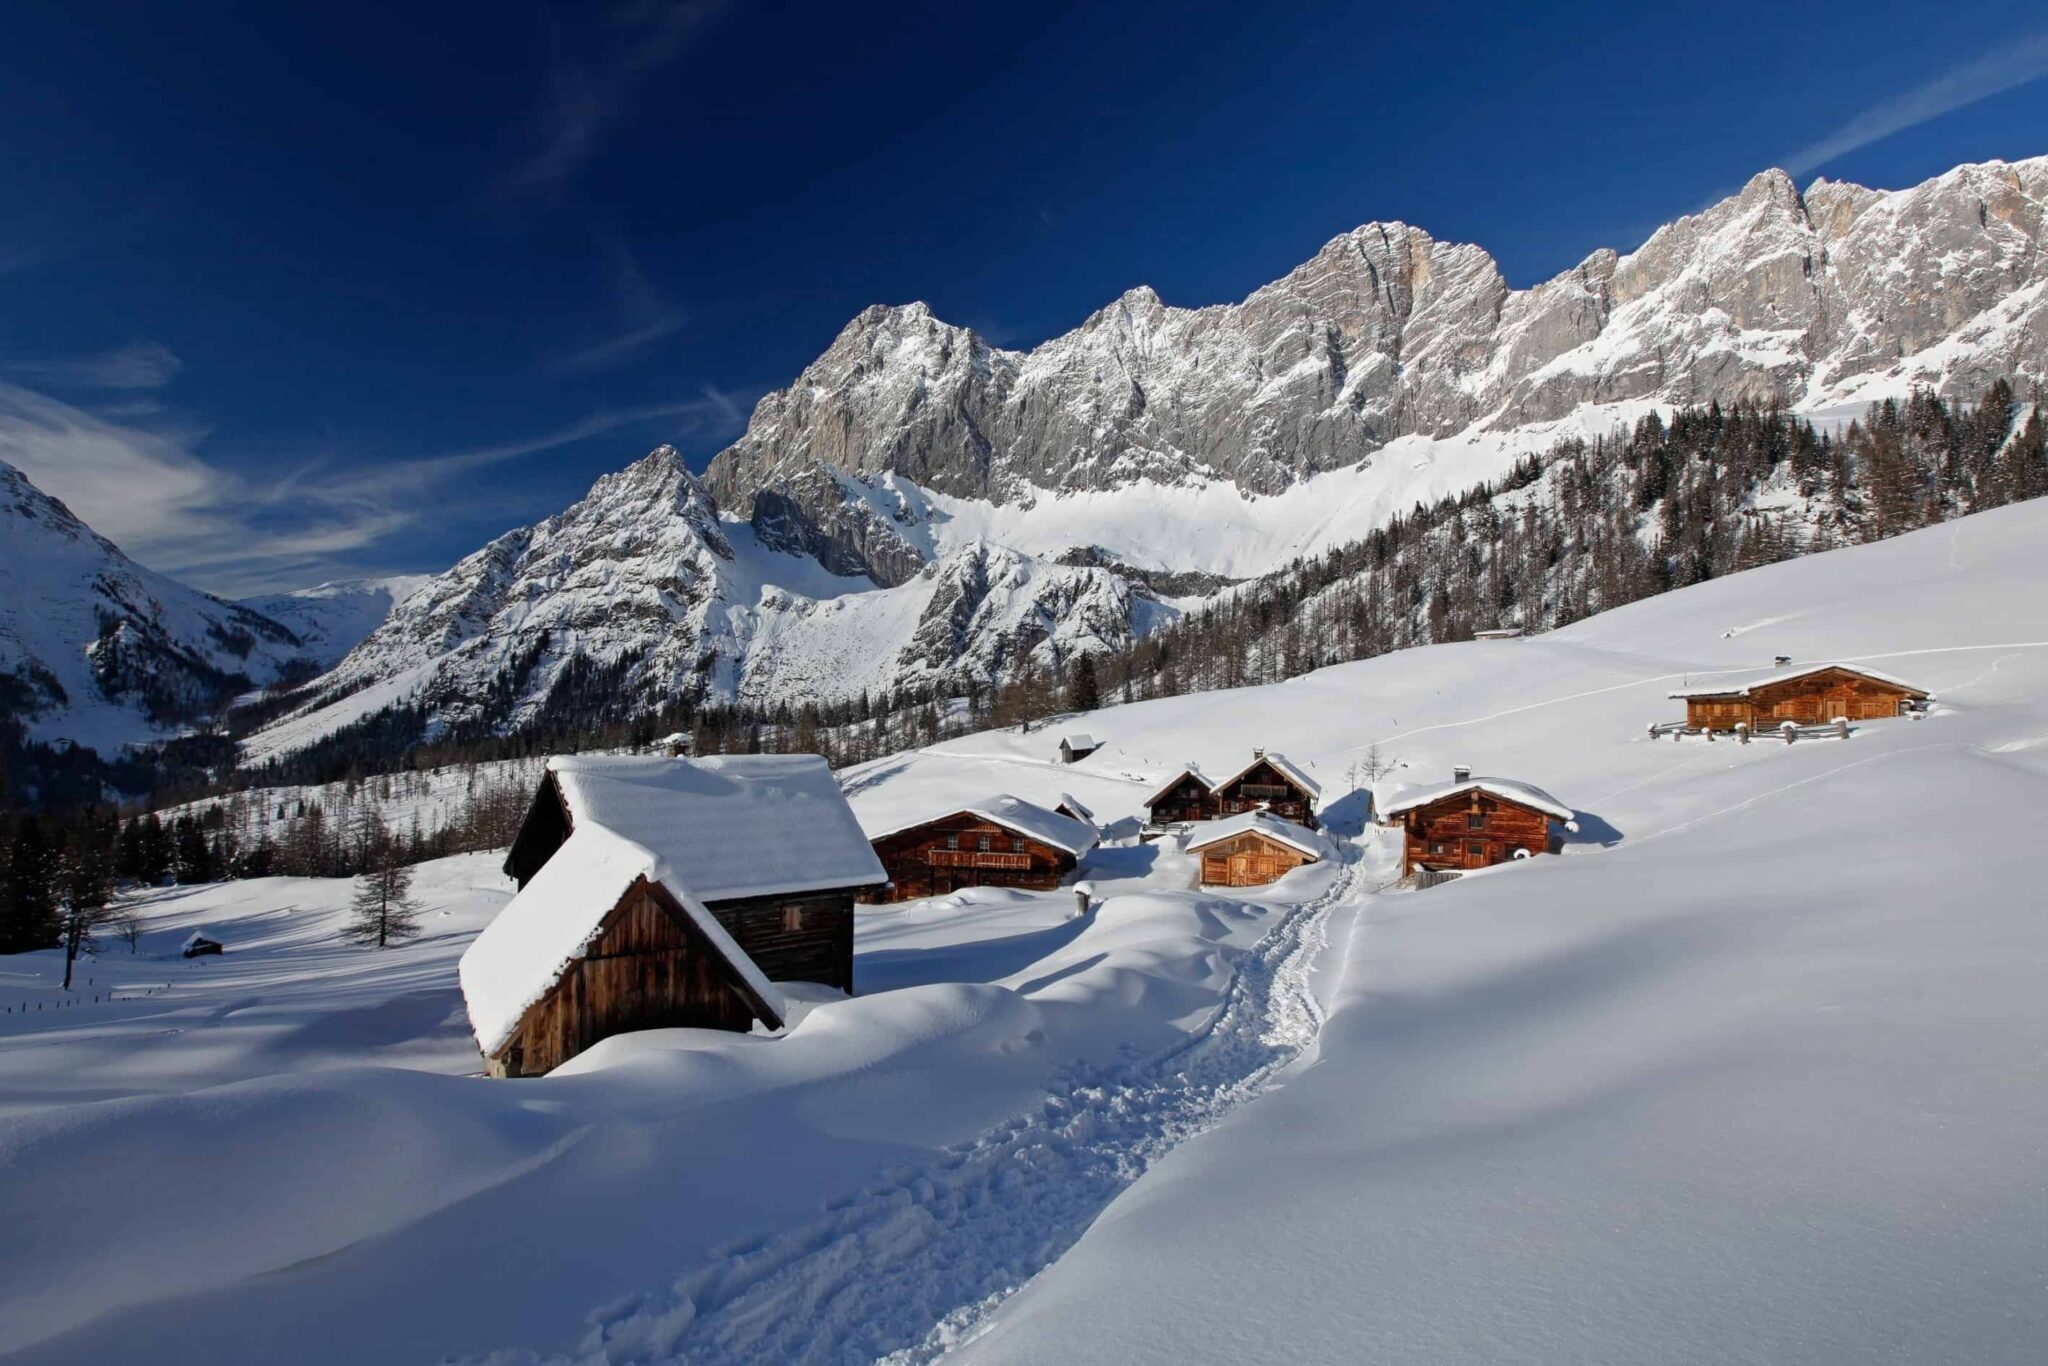 Ramsauer alpine region with a beautiful mountain panorama